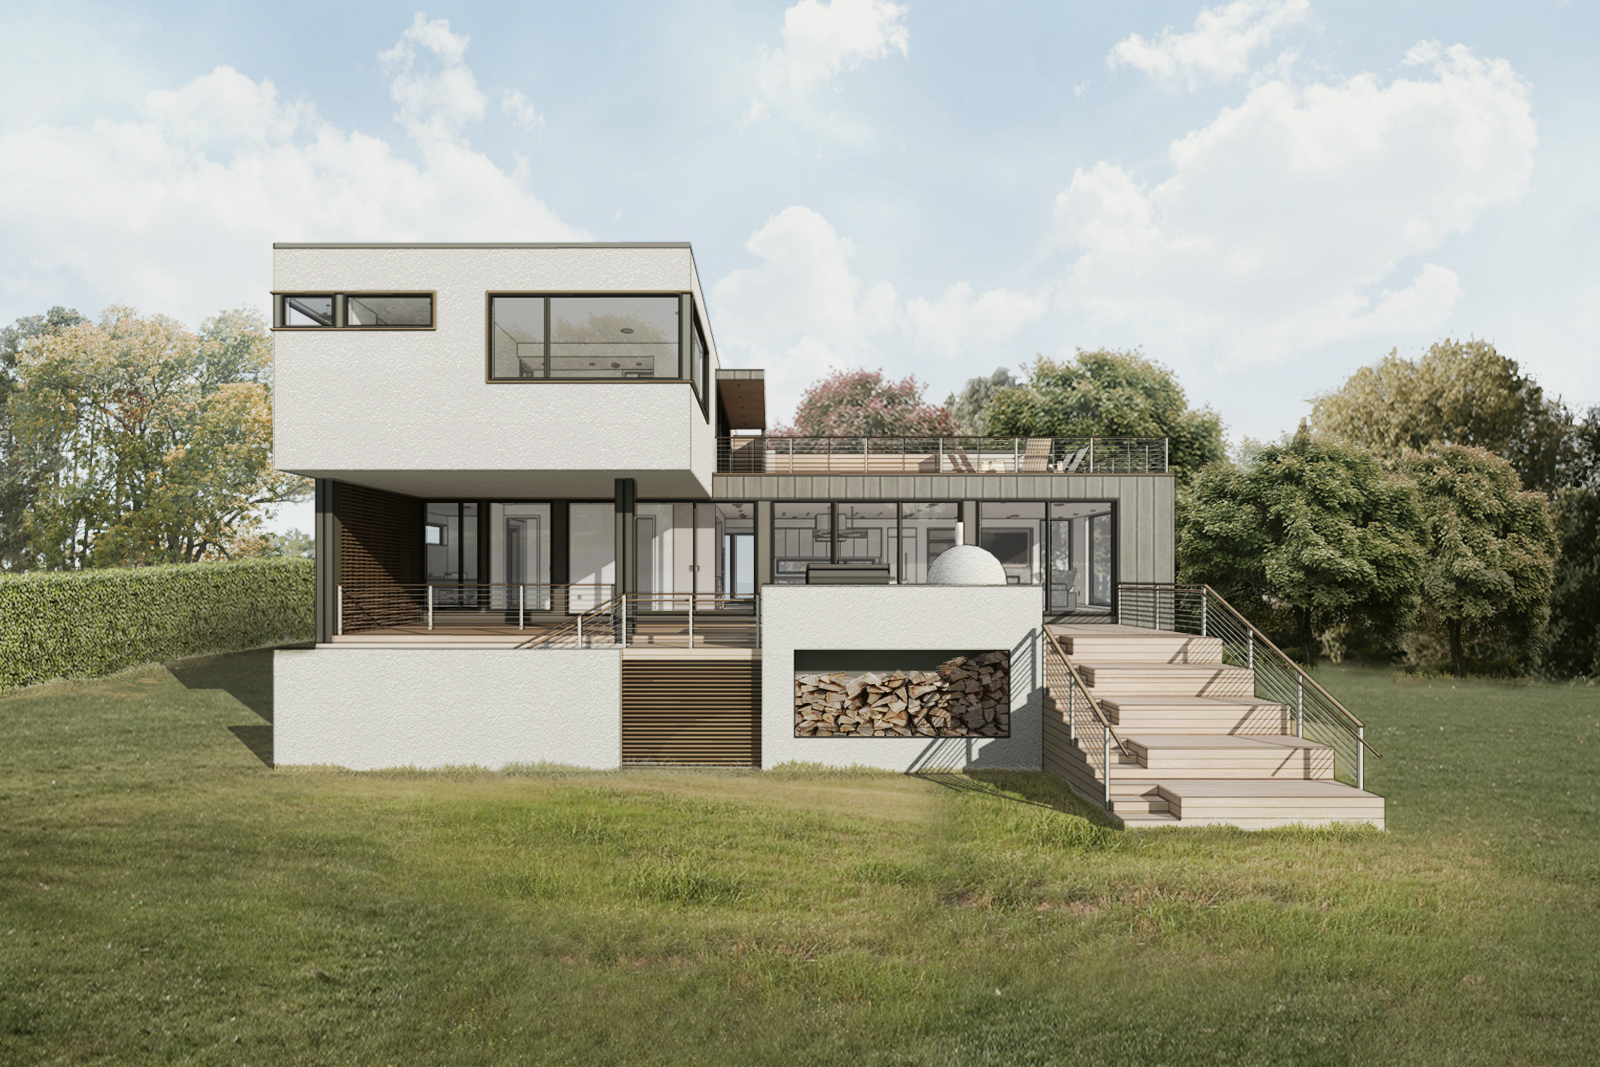 01-res4-resolution-4-architecture-modern-modular-prefab-douglas-lane-house-exterior-elevation-rendering.jpg